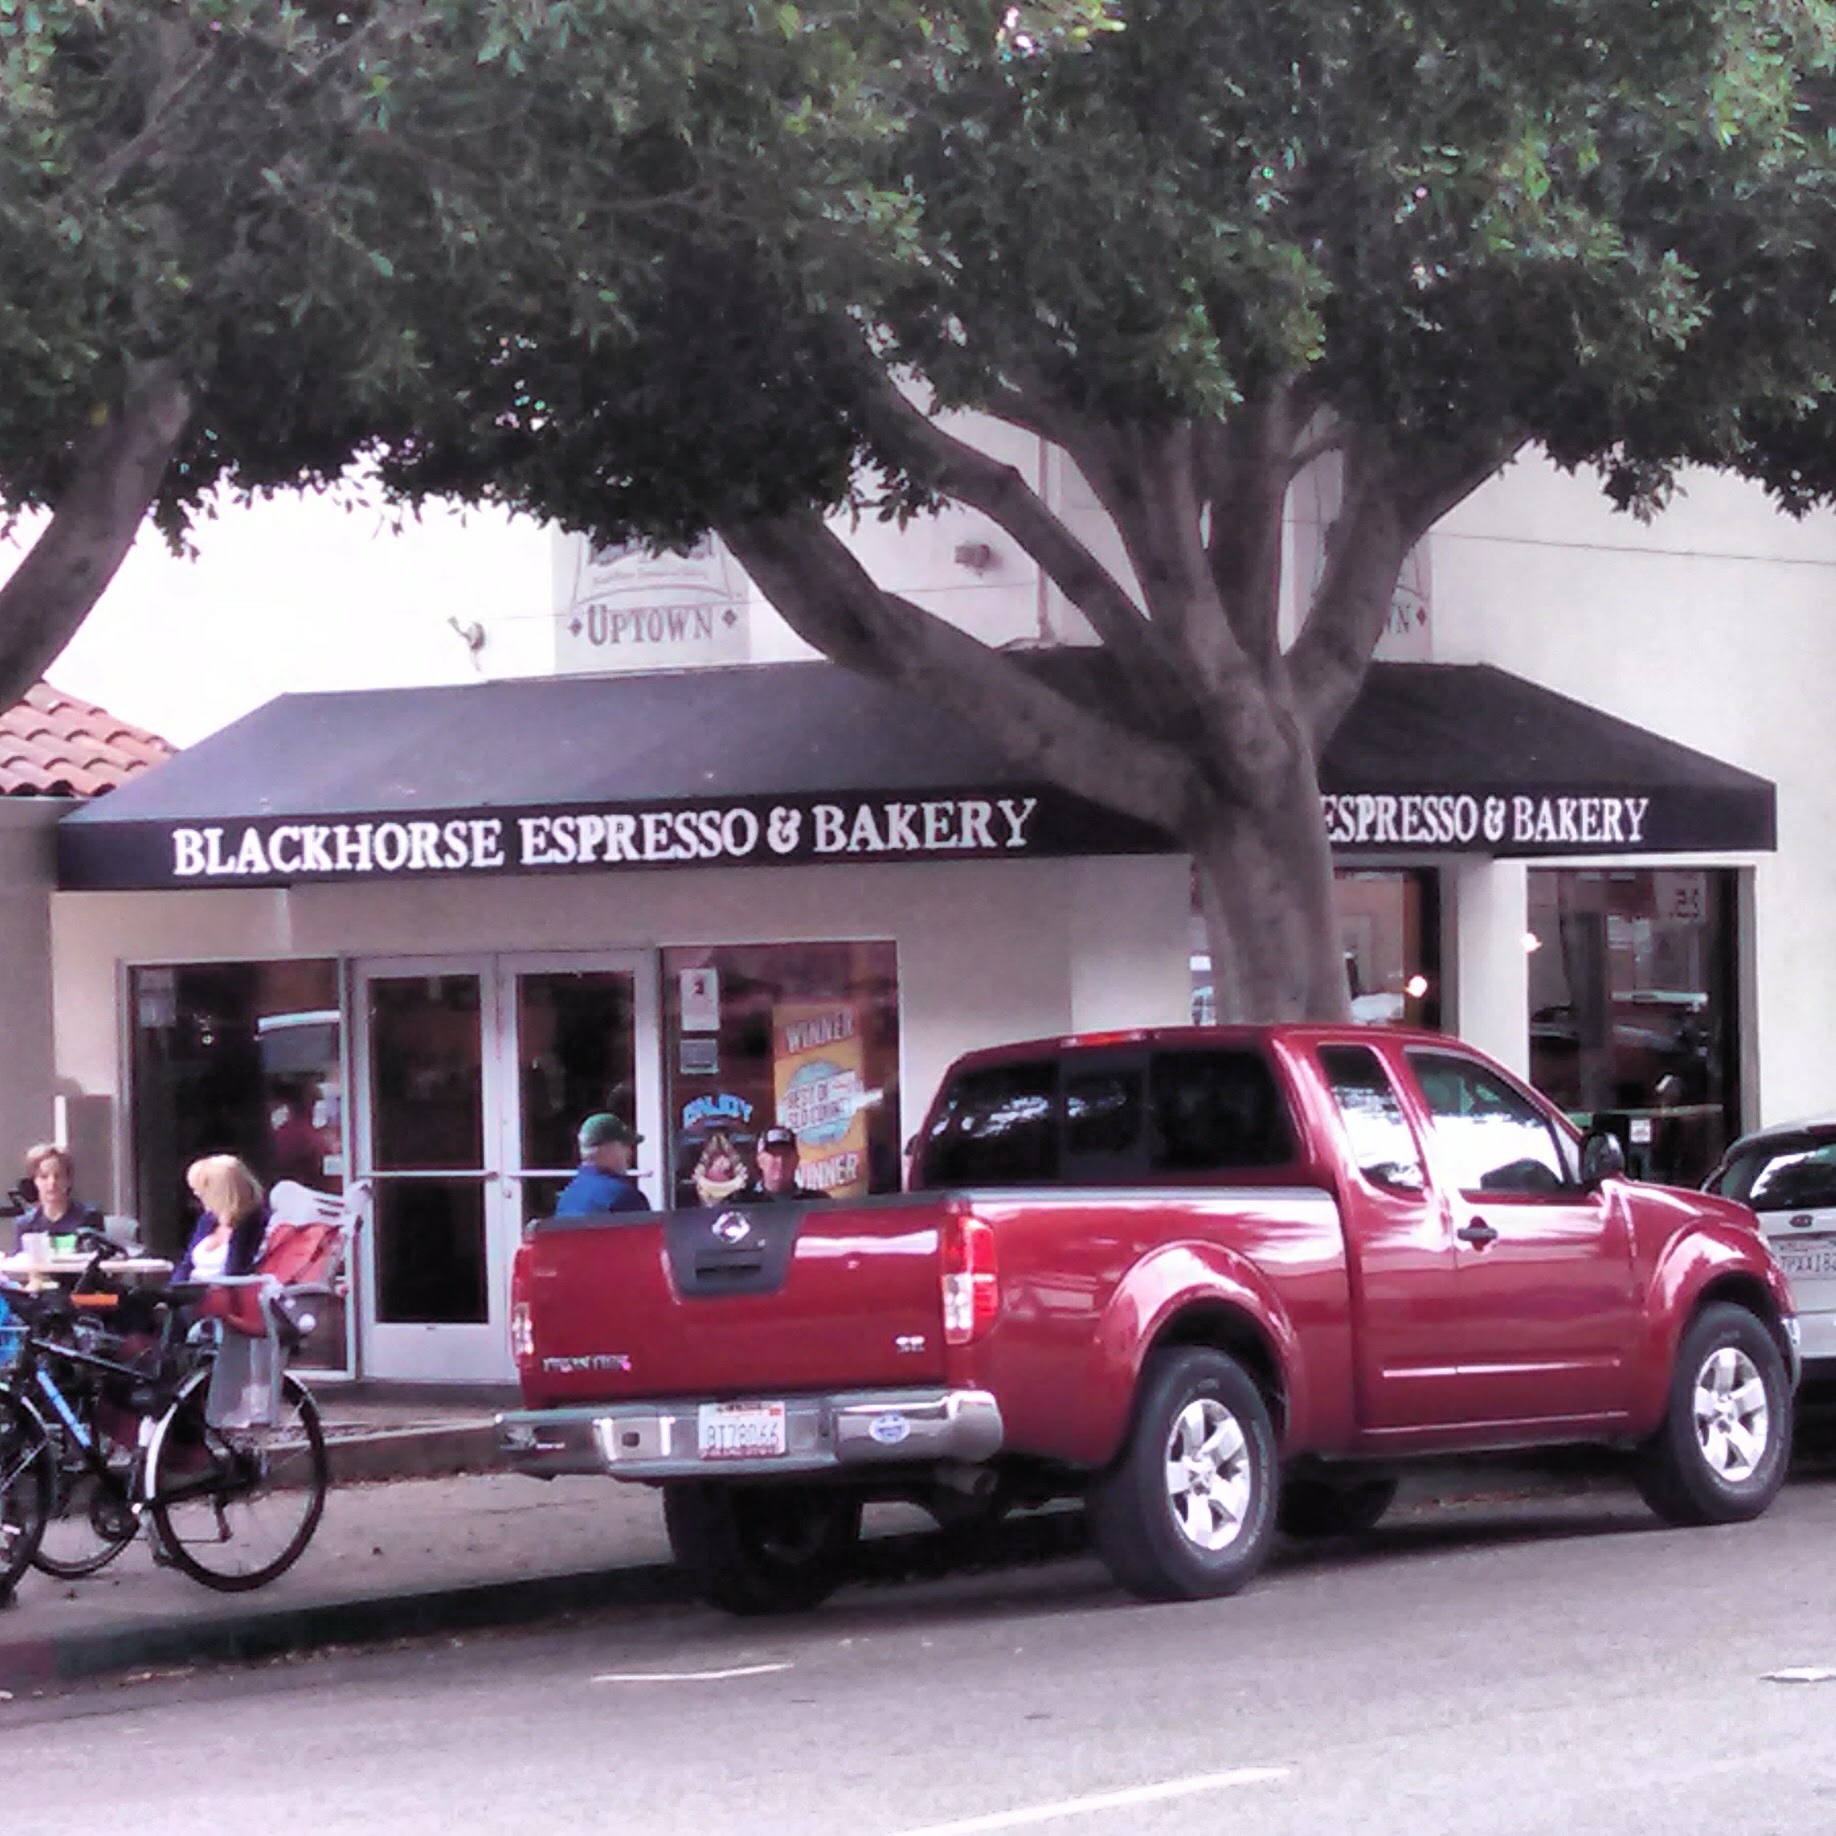 BlackHorse Espresso & Bakery